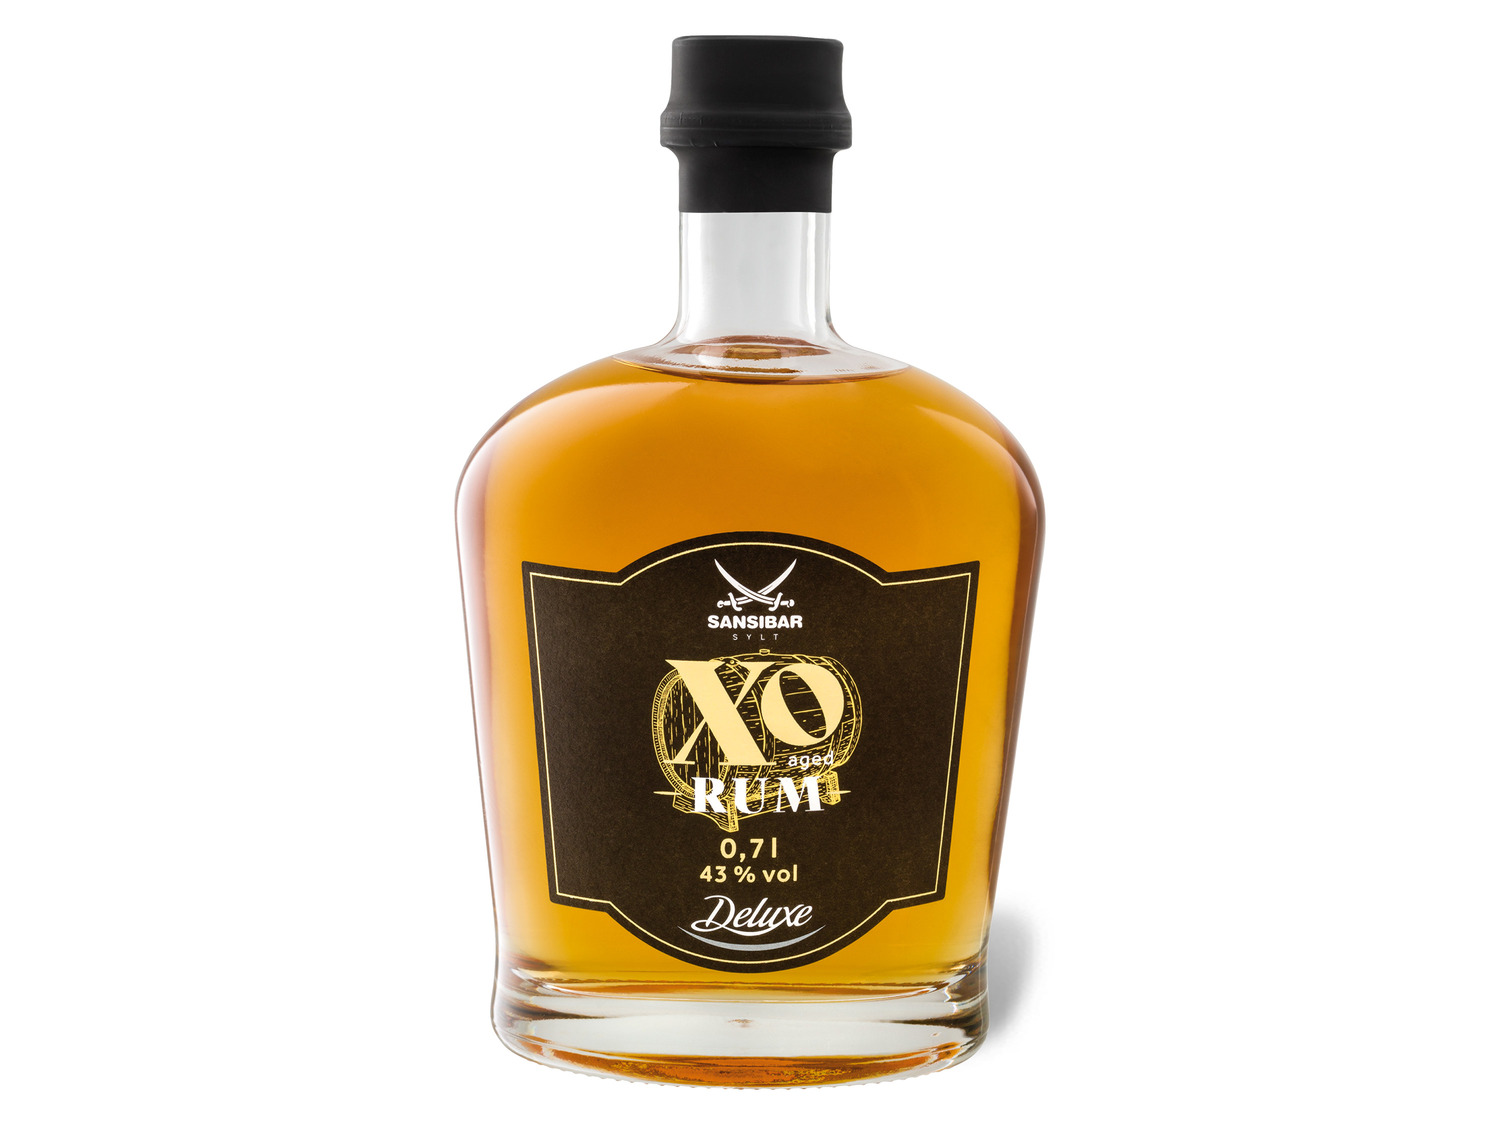 Sansibar Deluxe XO Aged Rum LIDL Vol 43% 